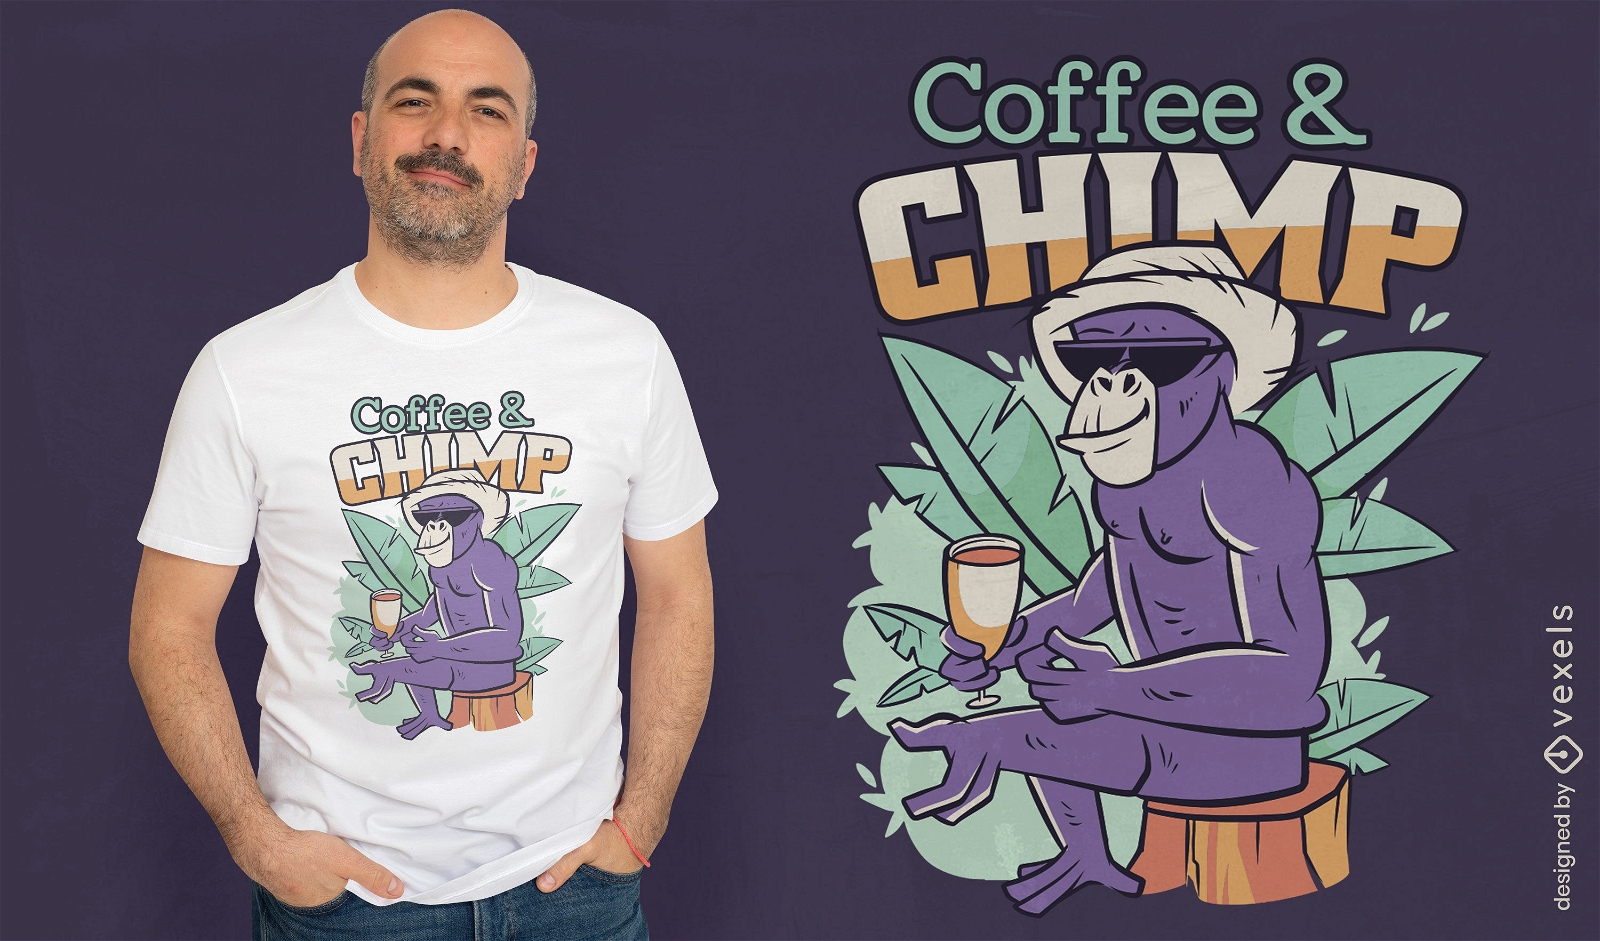 Coffee & chimp t-shirt design